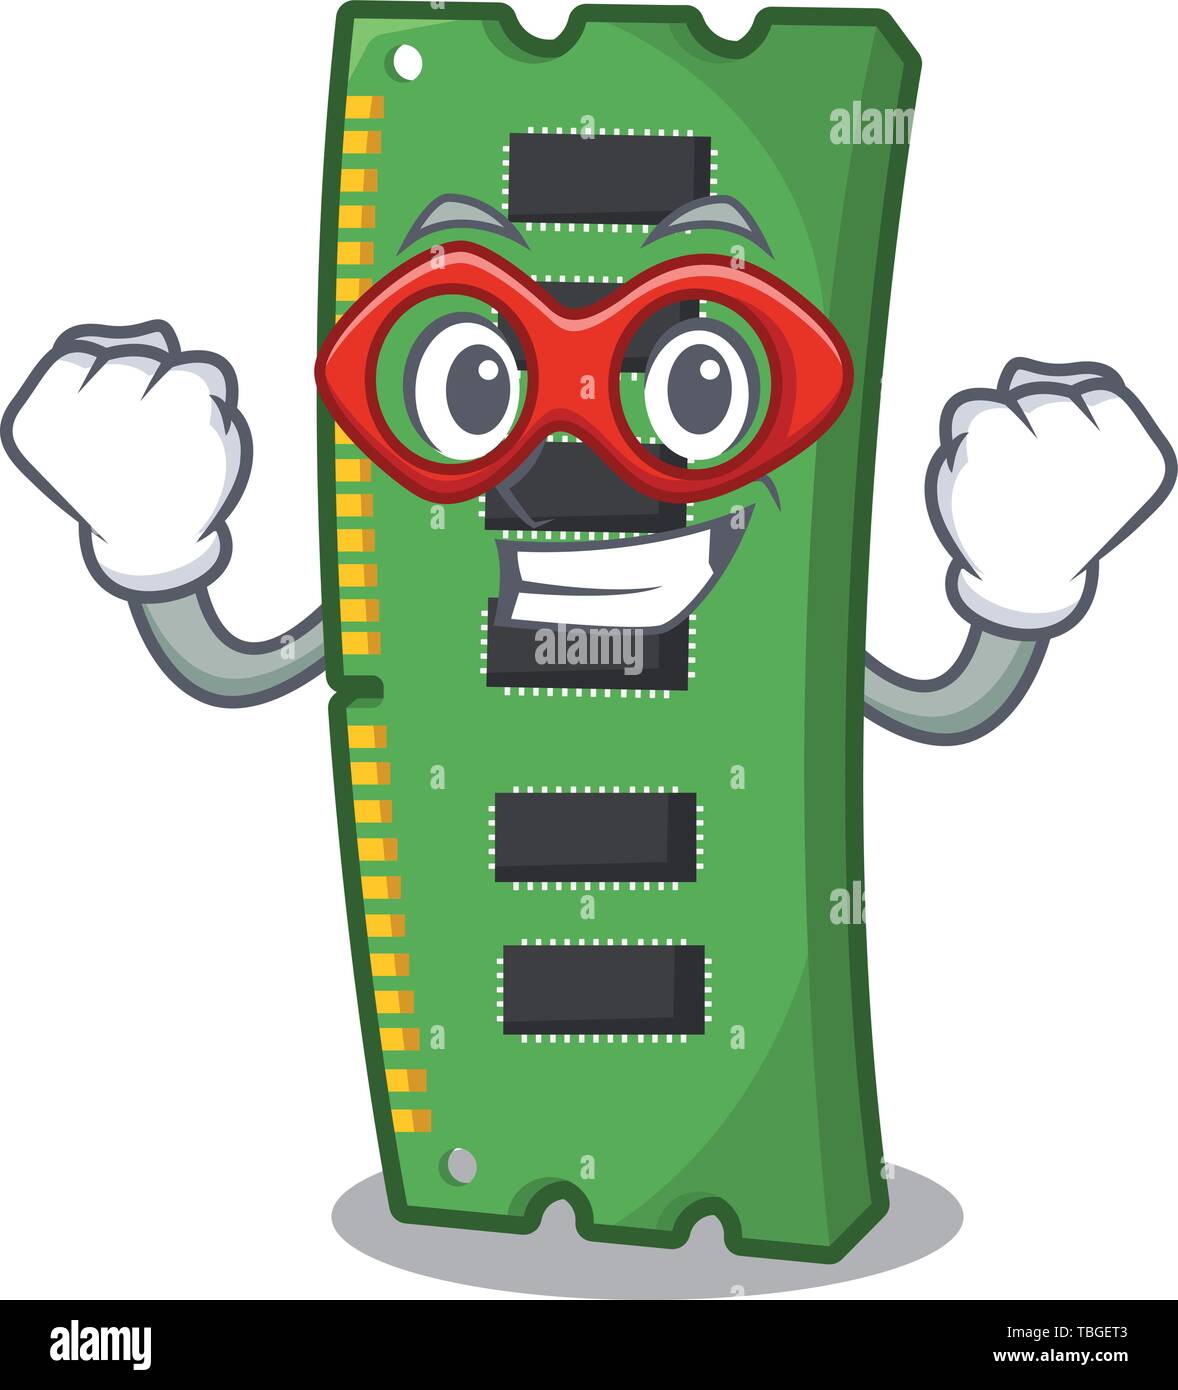 Super hero RAM memory card the mascot shape Stock Vector